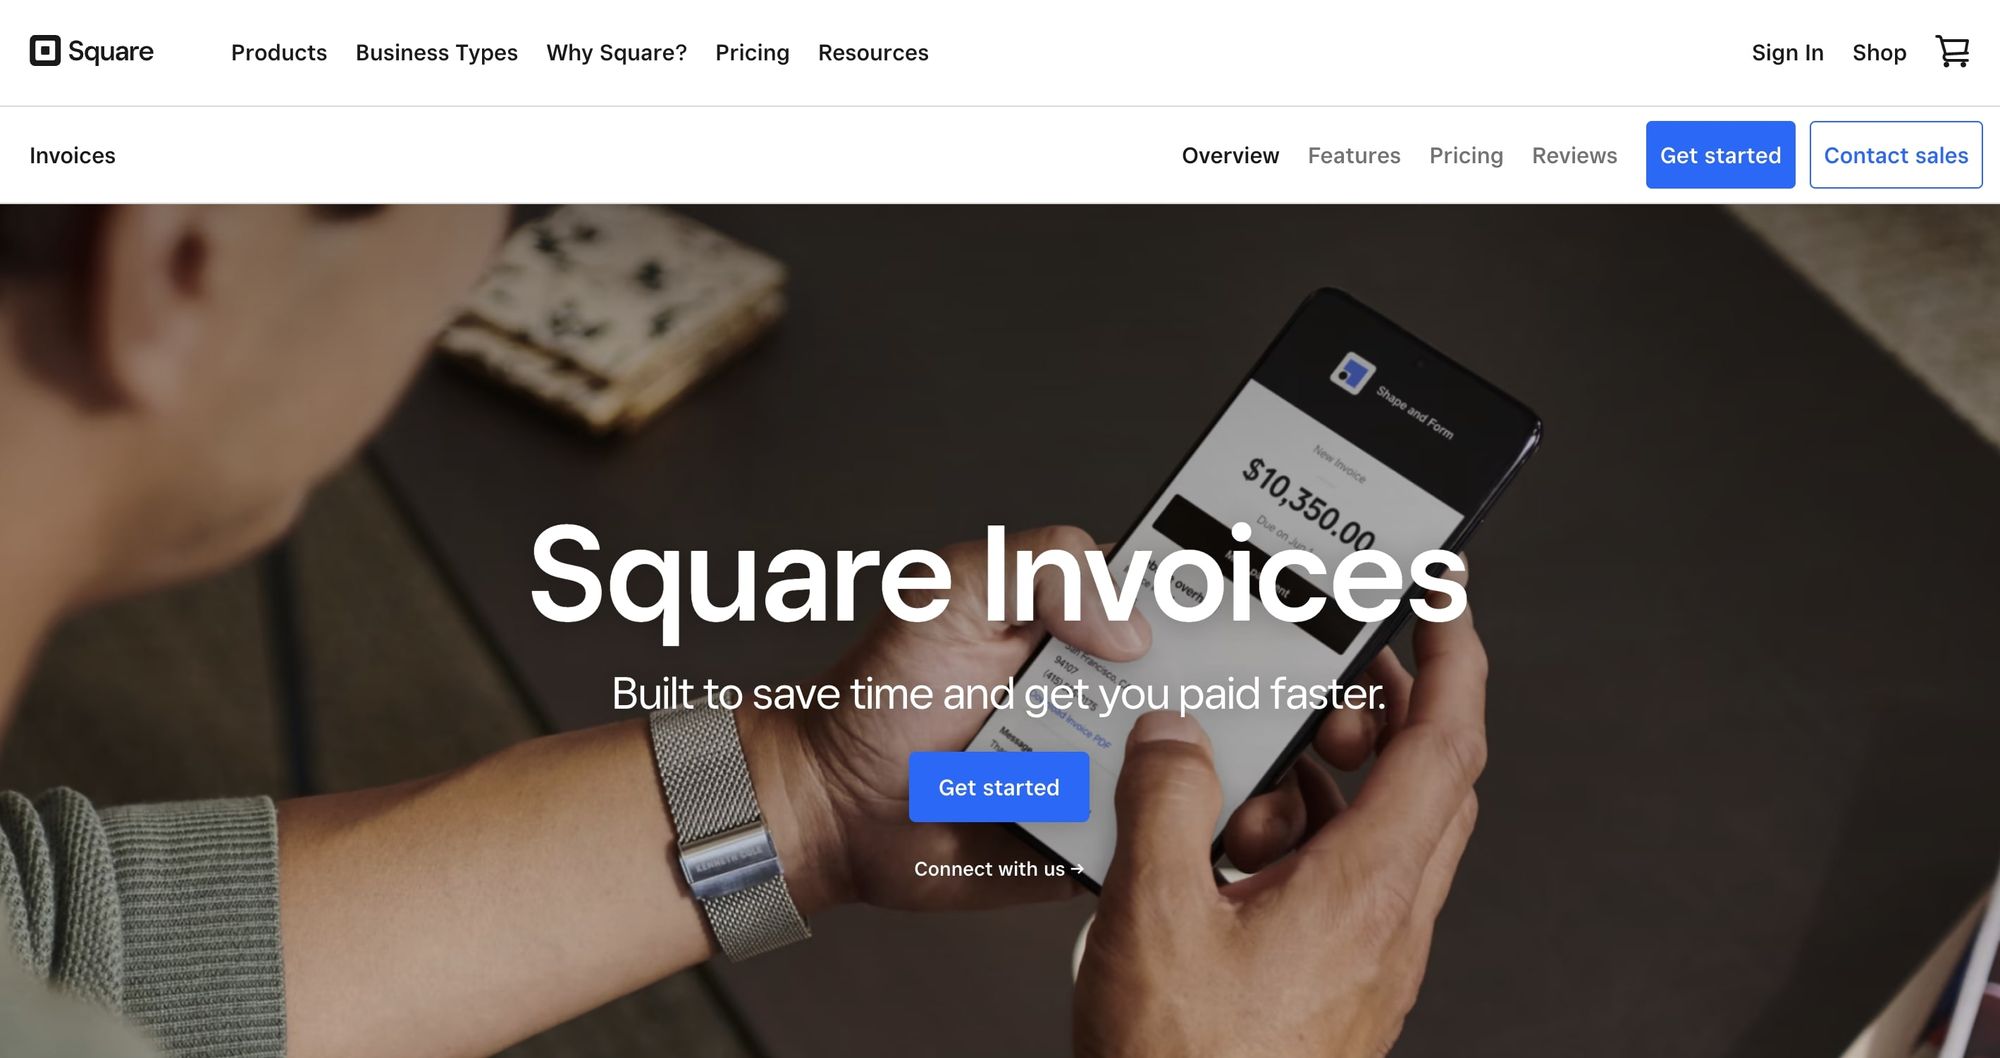 Square invoices